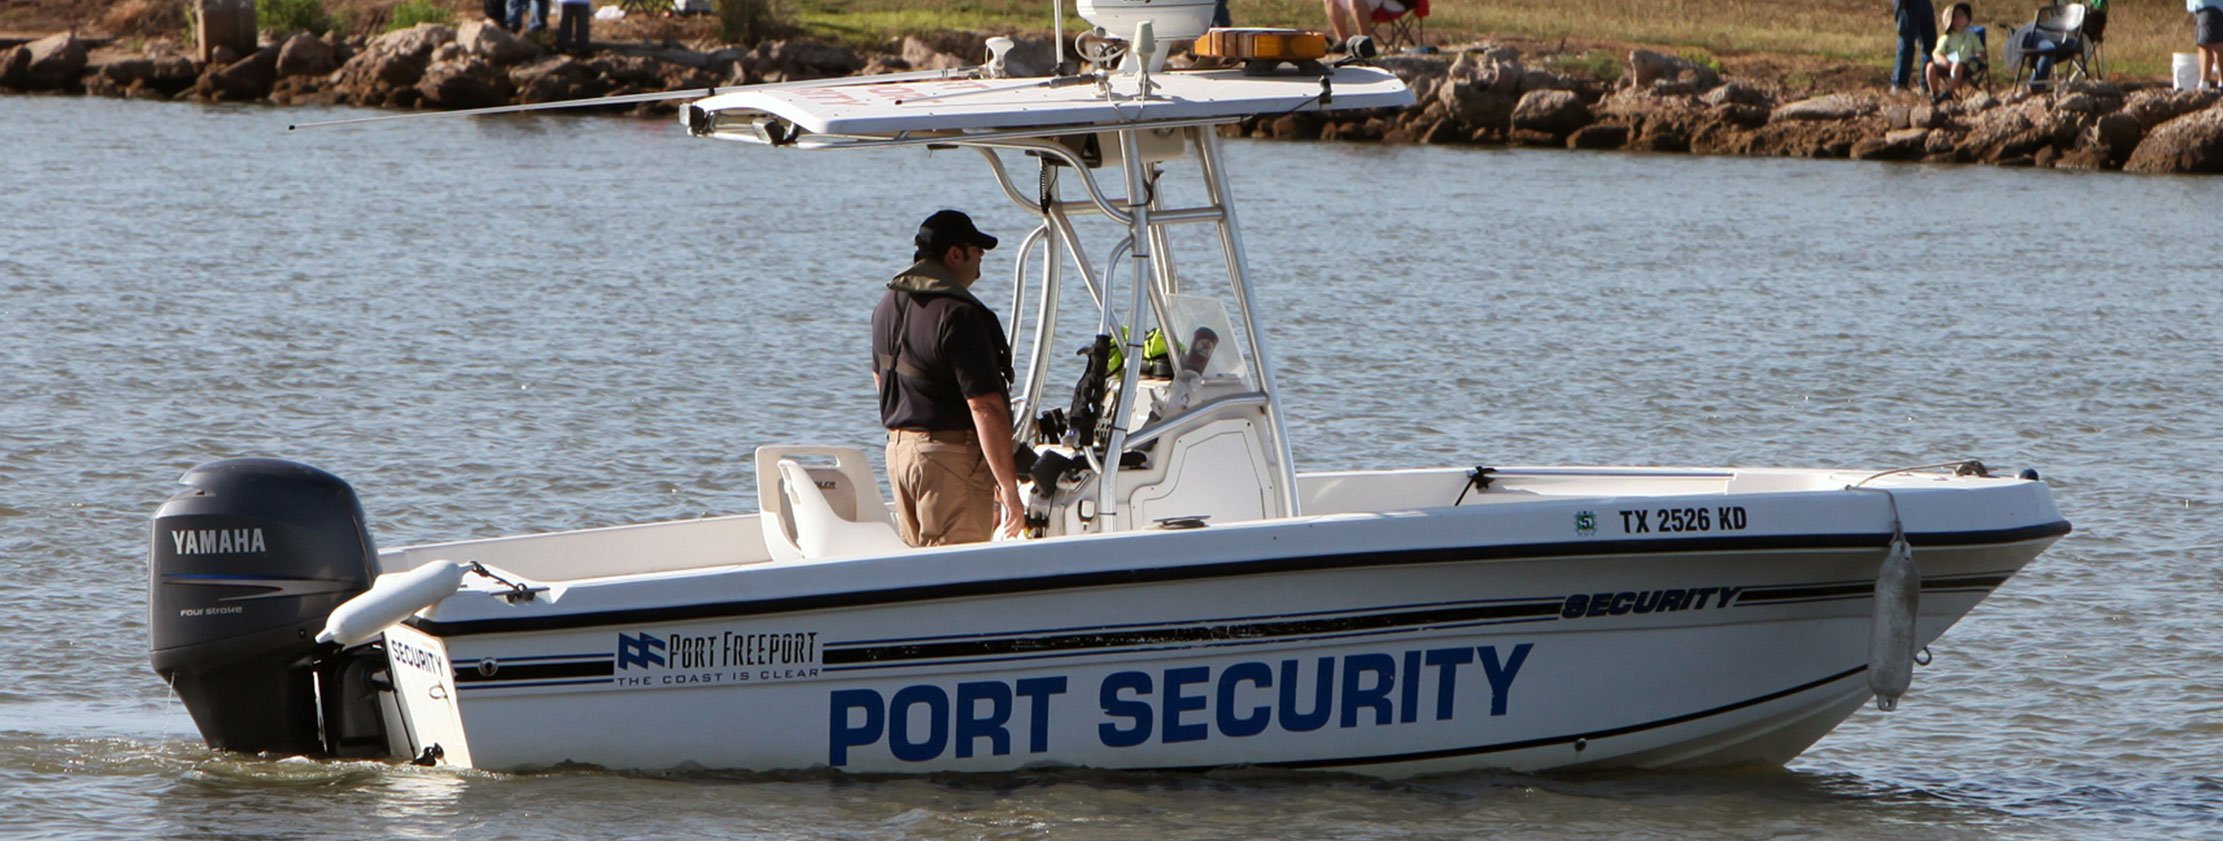 port security at port freeport texas